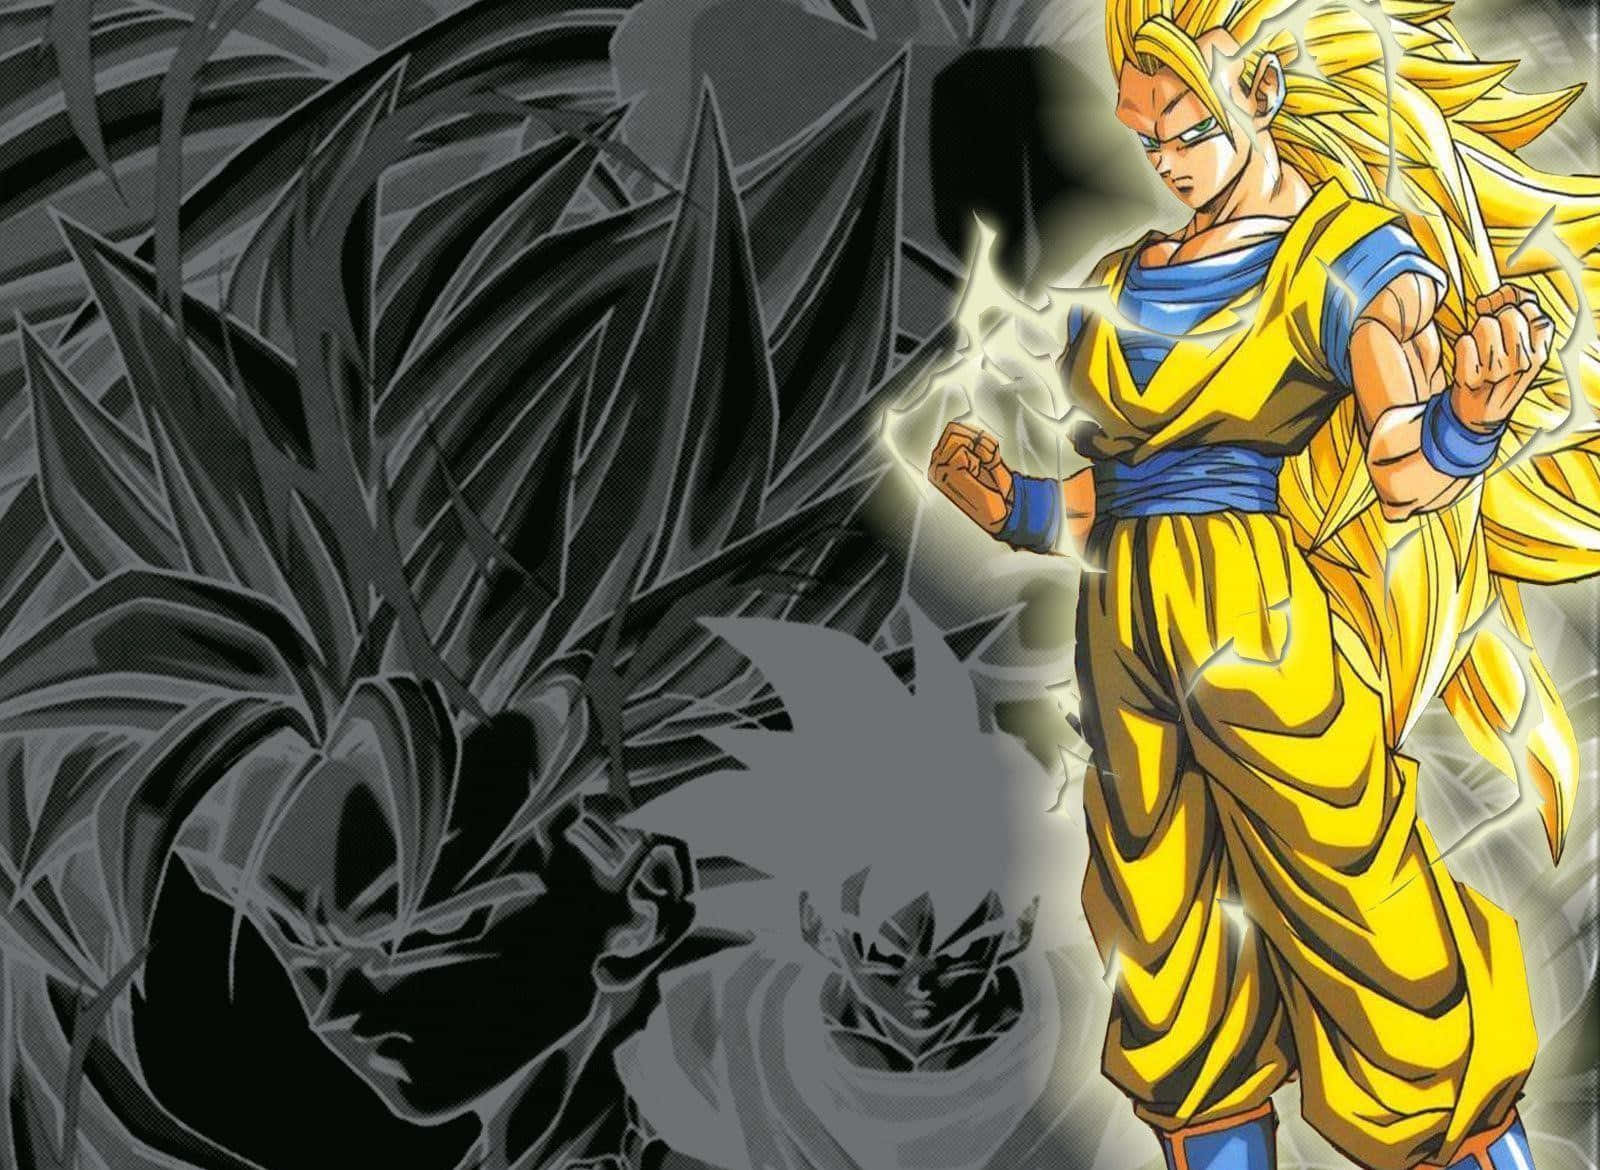 Download Dragon Ball Z Goku In Super Saiyan 3 Form Wallpaper | Wallpapers .com